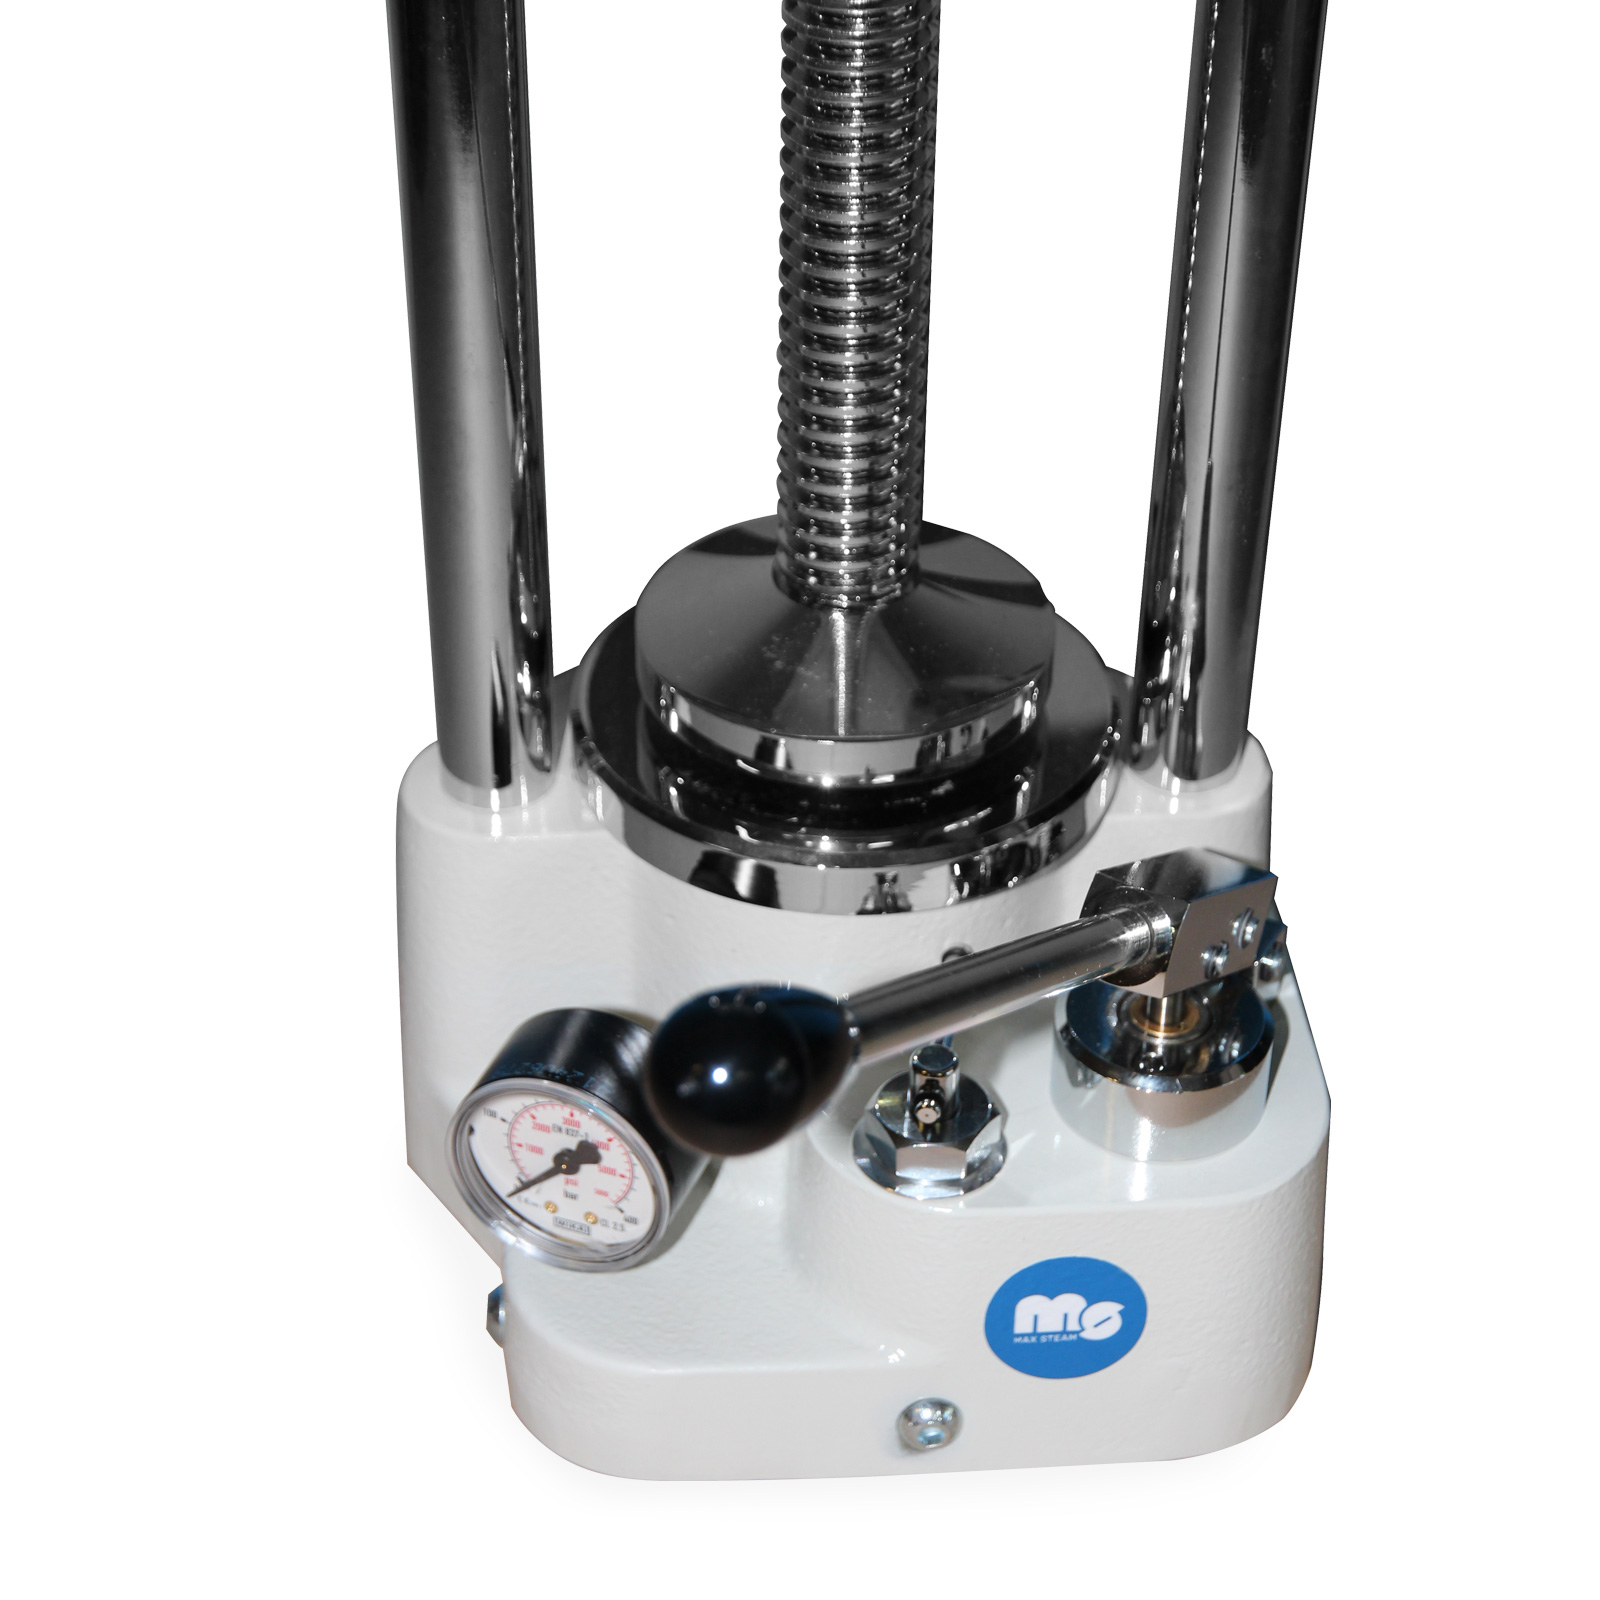 LVL Chipboard Hydraulic Hot Press Machine by Oil/Steam Heating